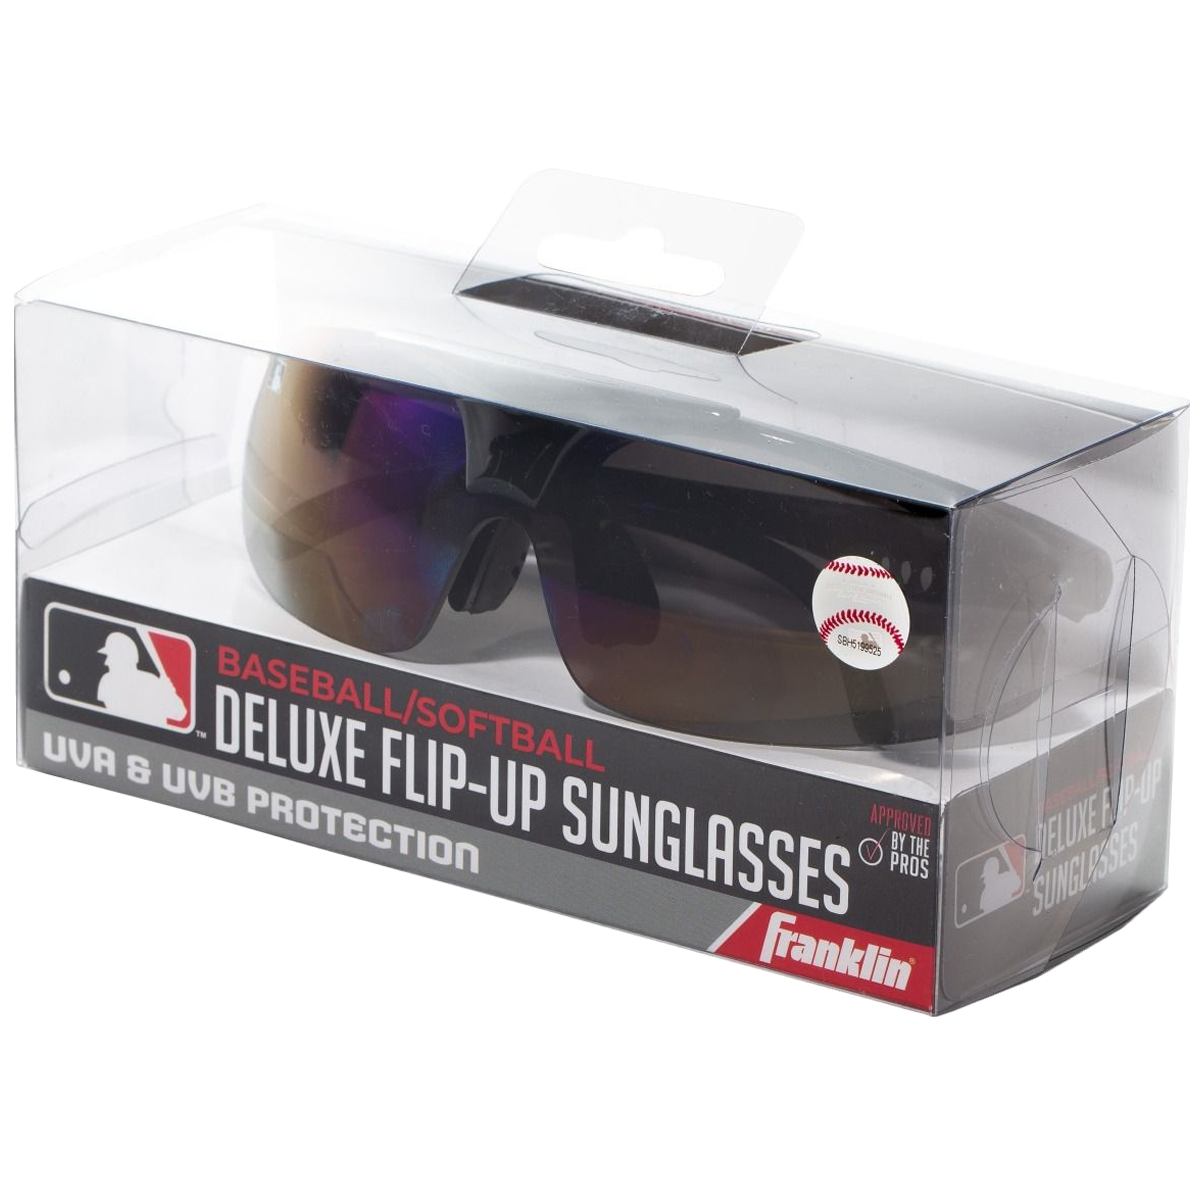 MLB Deluxe Flip Up Sunglasses alternate view